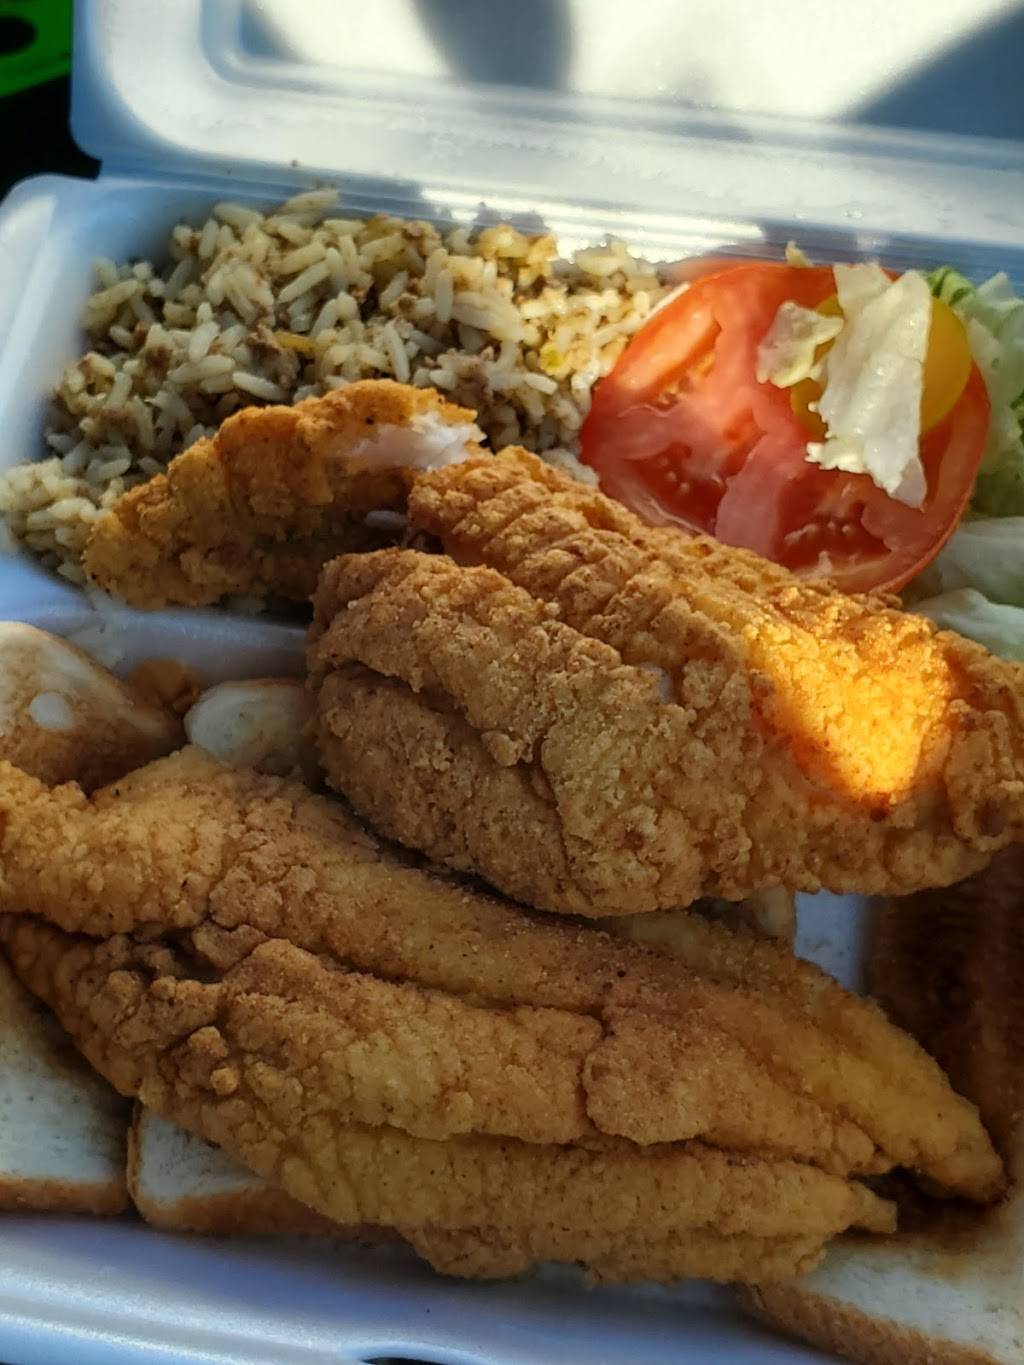 Poppas Seafood & Deli | 3311 N Galvez St, New Orleans, LA 70117, USA | Phone: (504) 947-3373